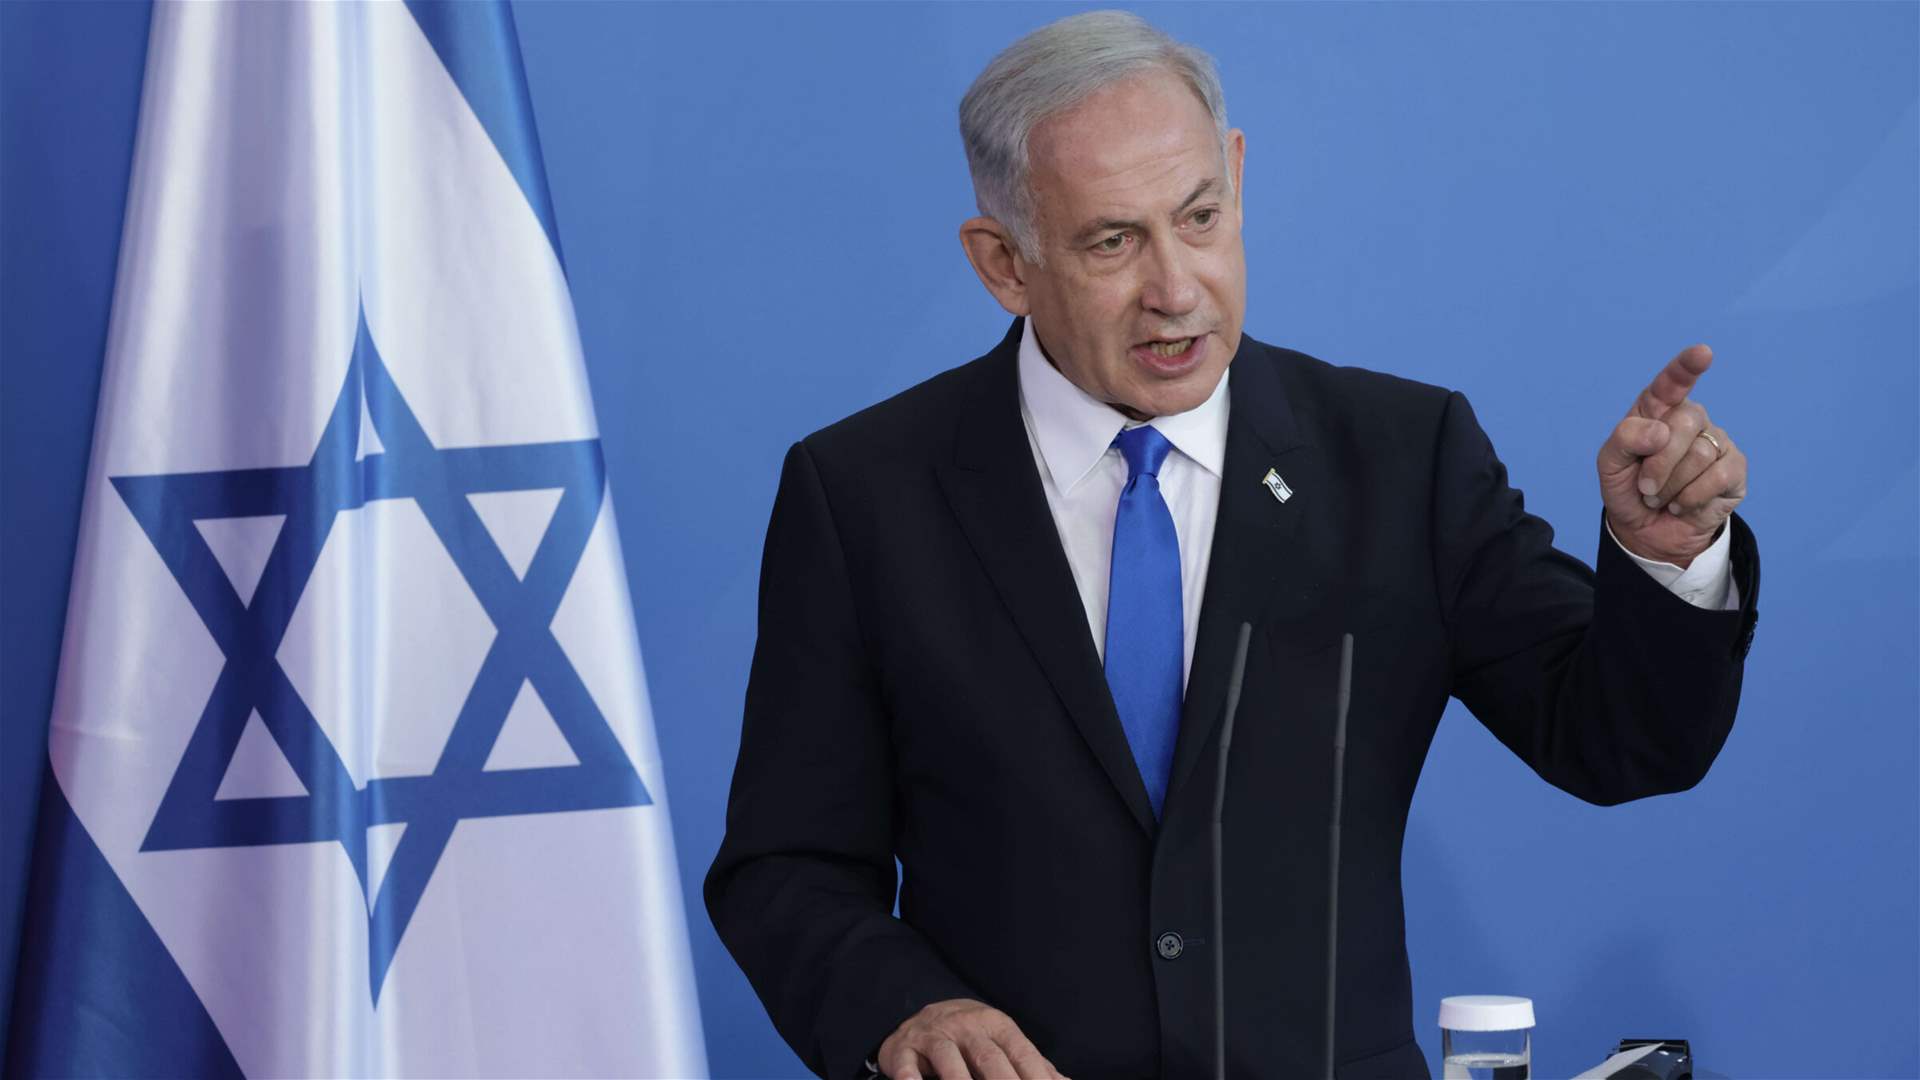 Upcoming meetings in Washington: Netanyahu&#39;s visit brings focus on Gaza and hostages